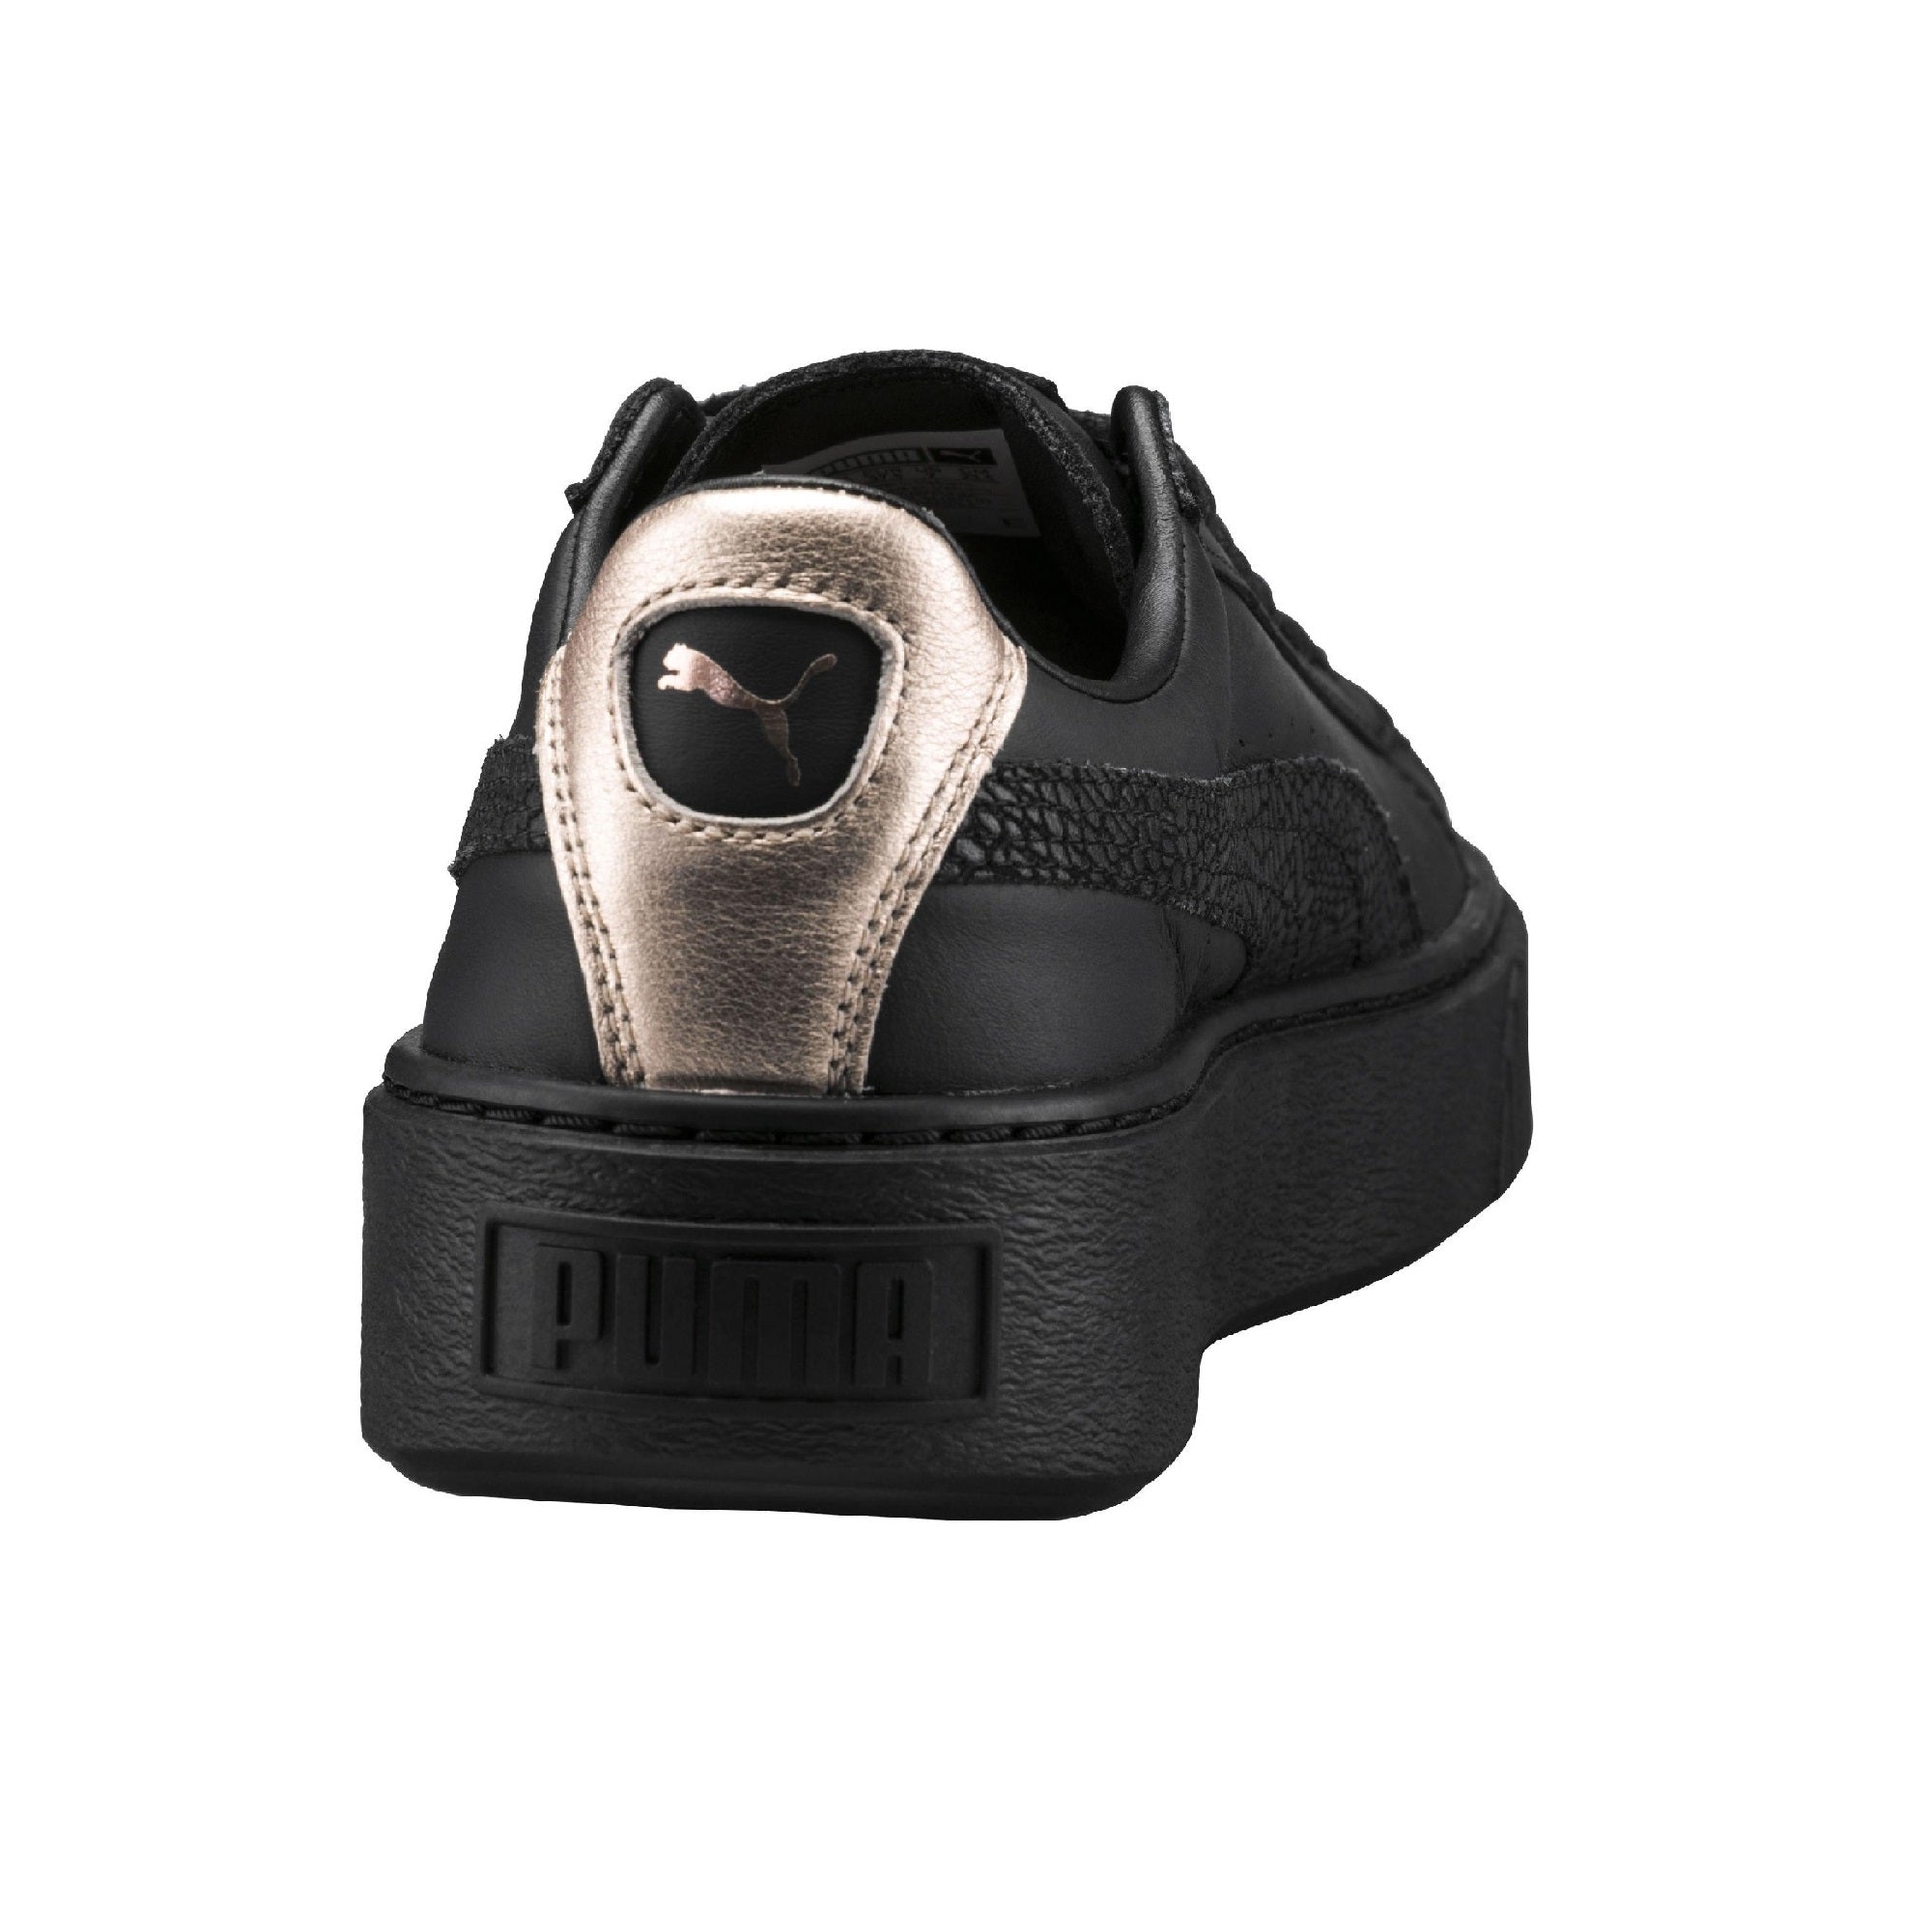 Puma women&#39;s sneakers shoe with wedge Basket Euphoria RG 366814 01 black